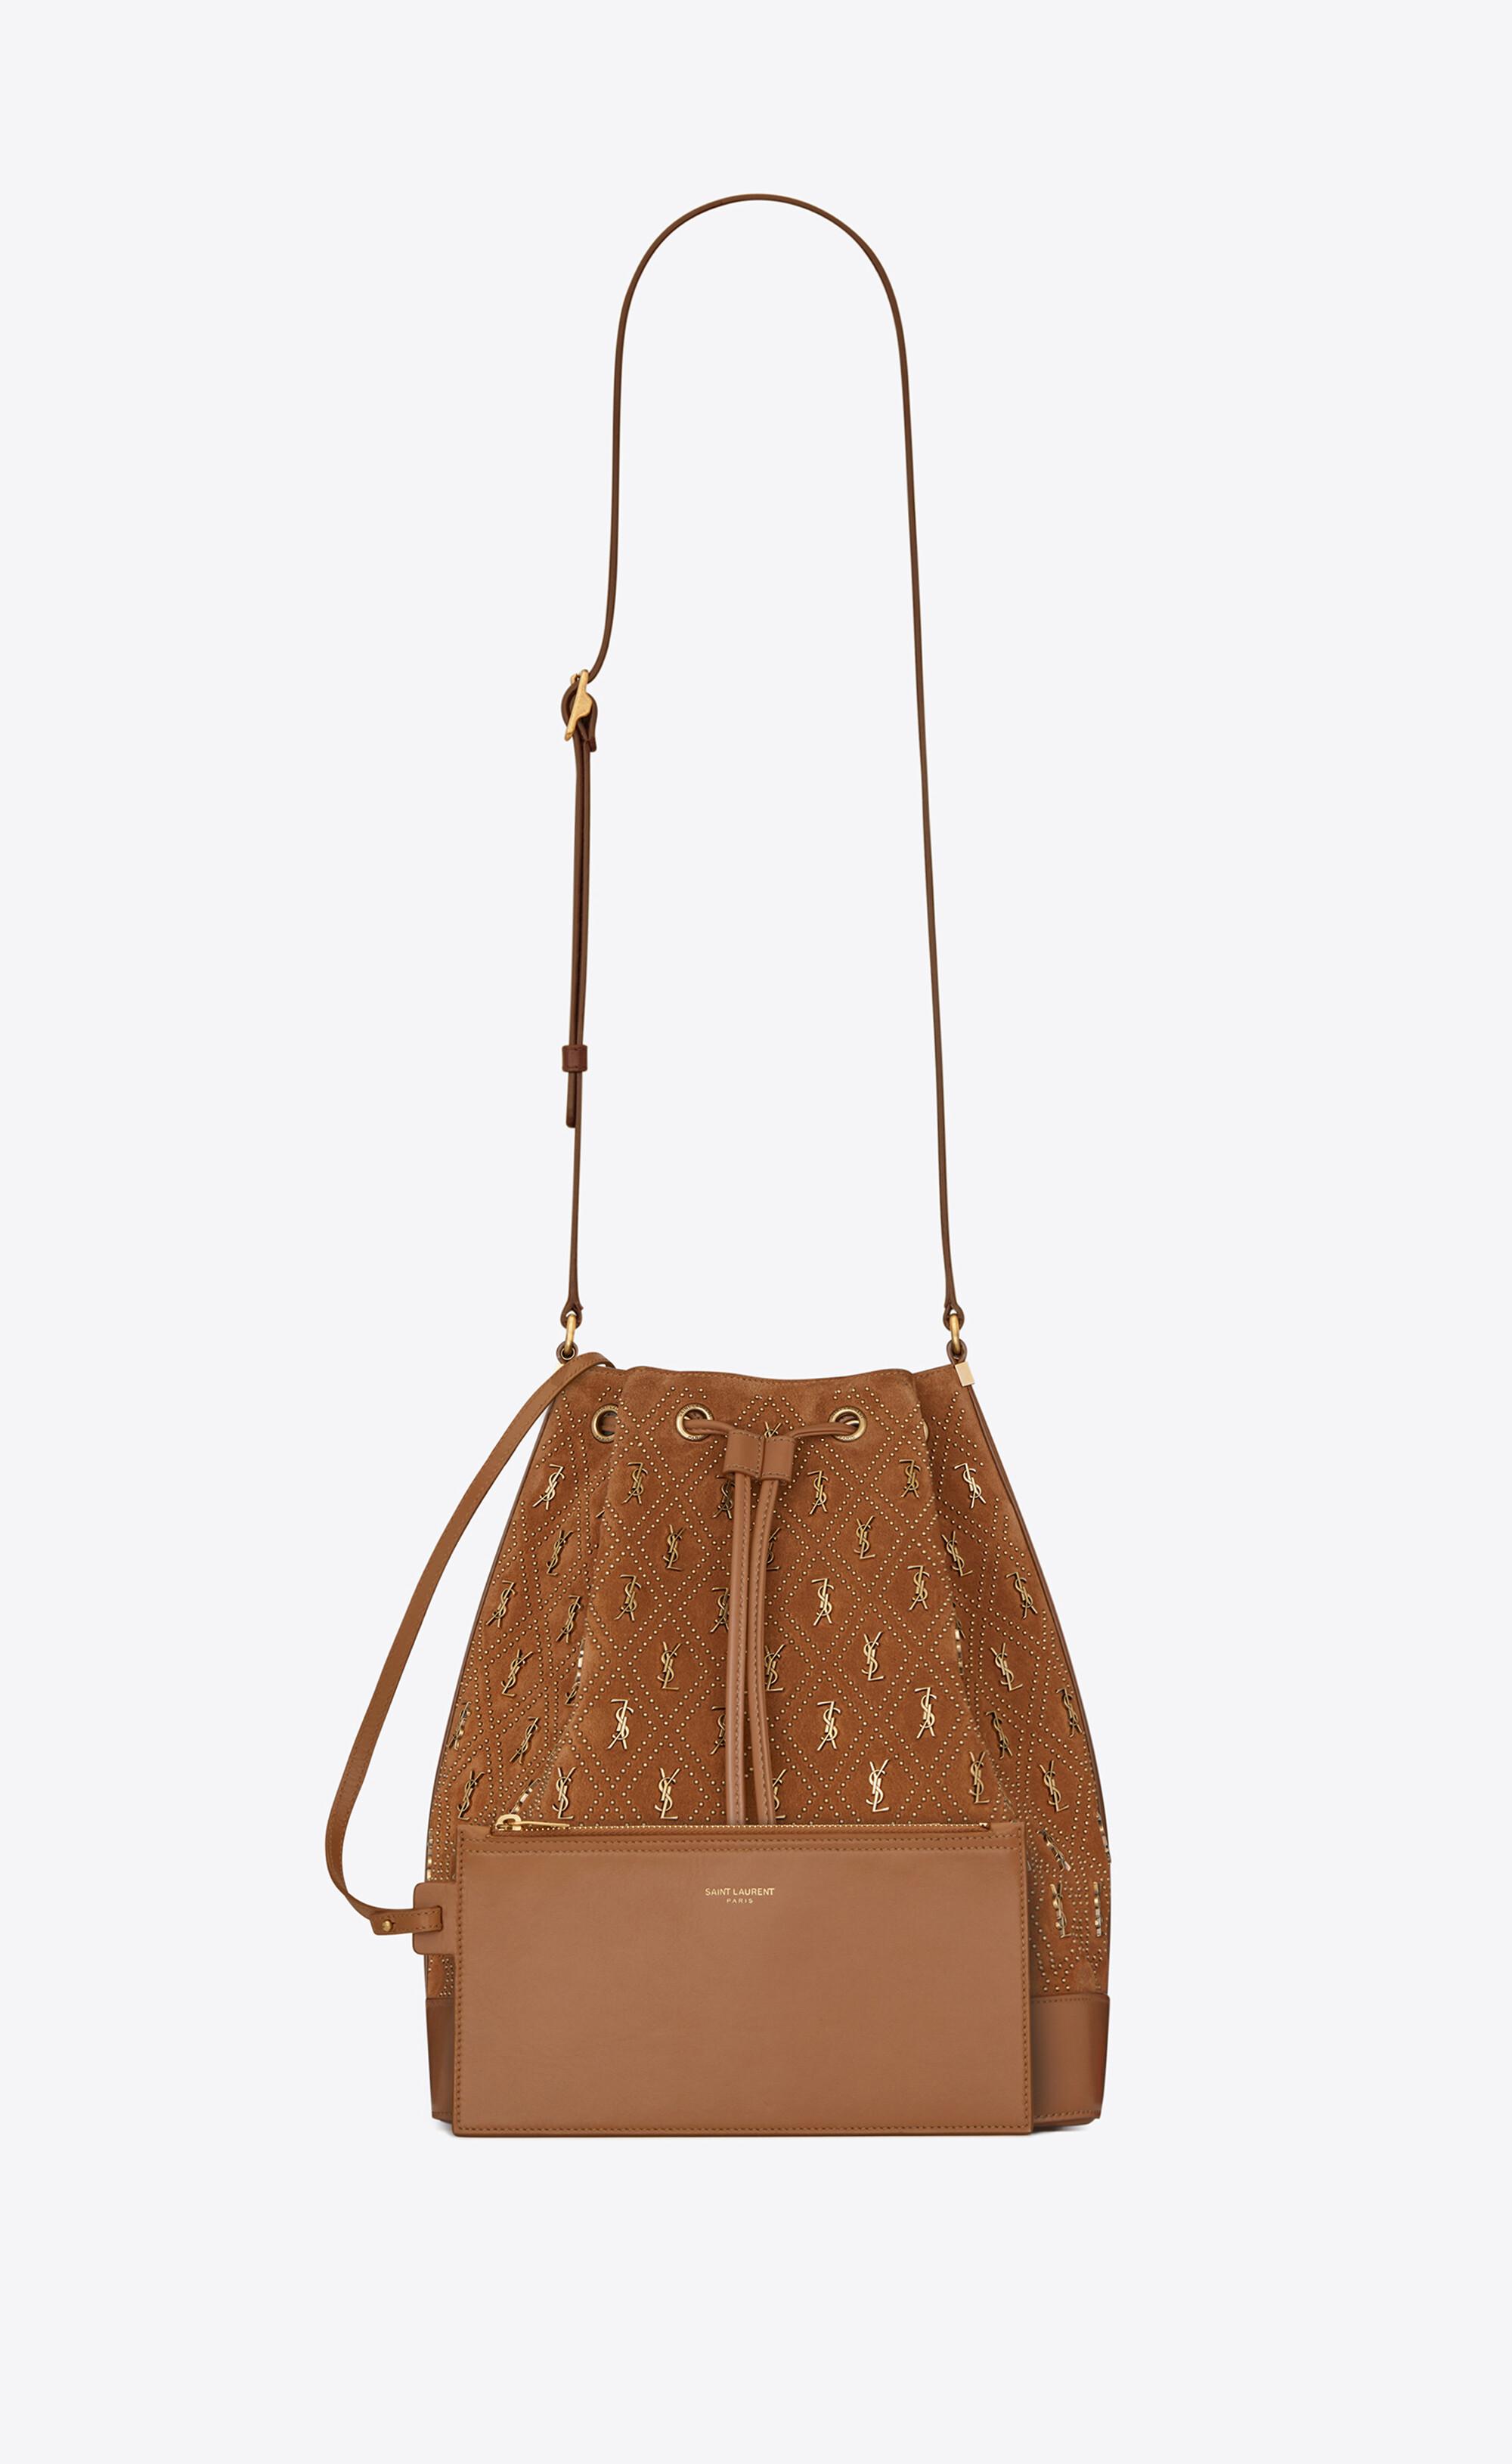 Brown Le Monogramme YSL leather cross-body bag, Saint Laurent